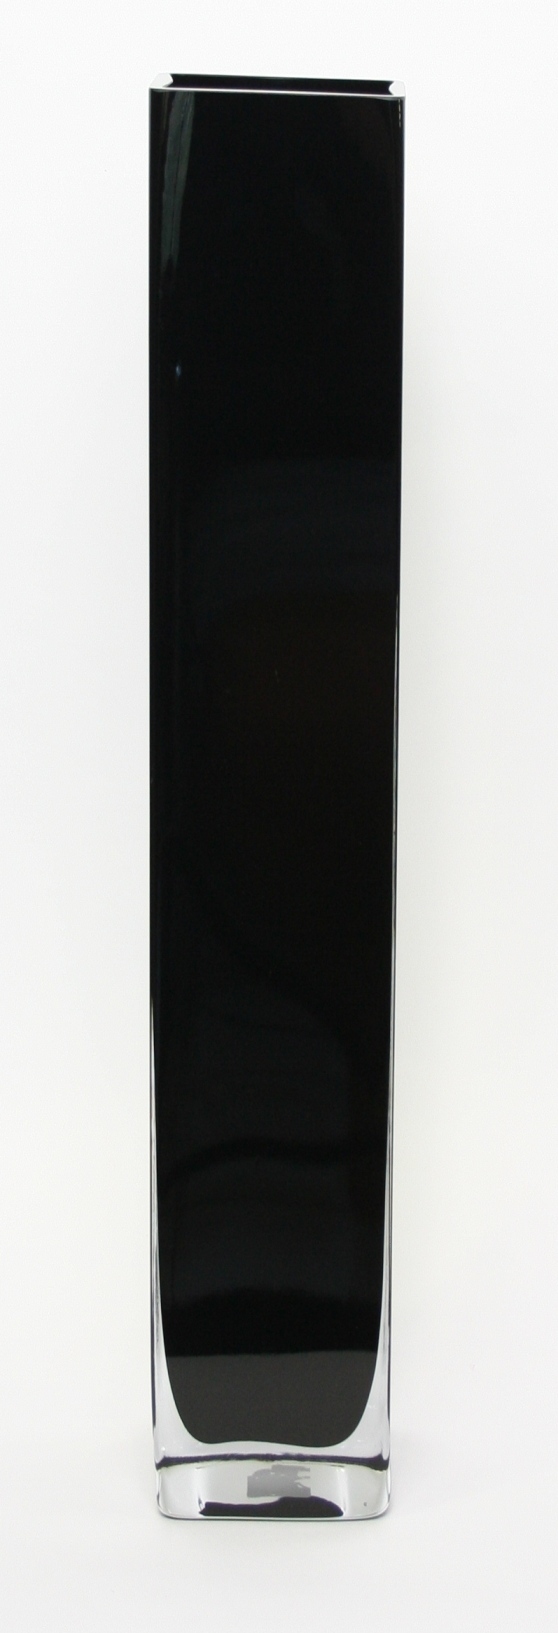 Accuvaas zwart glas 10 cm breed 60 cm hoog heavy glas